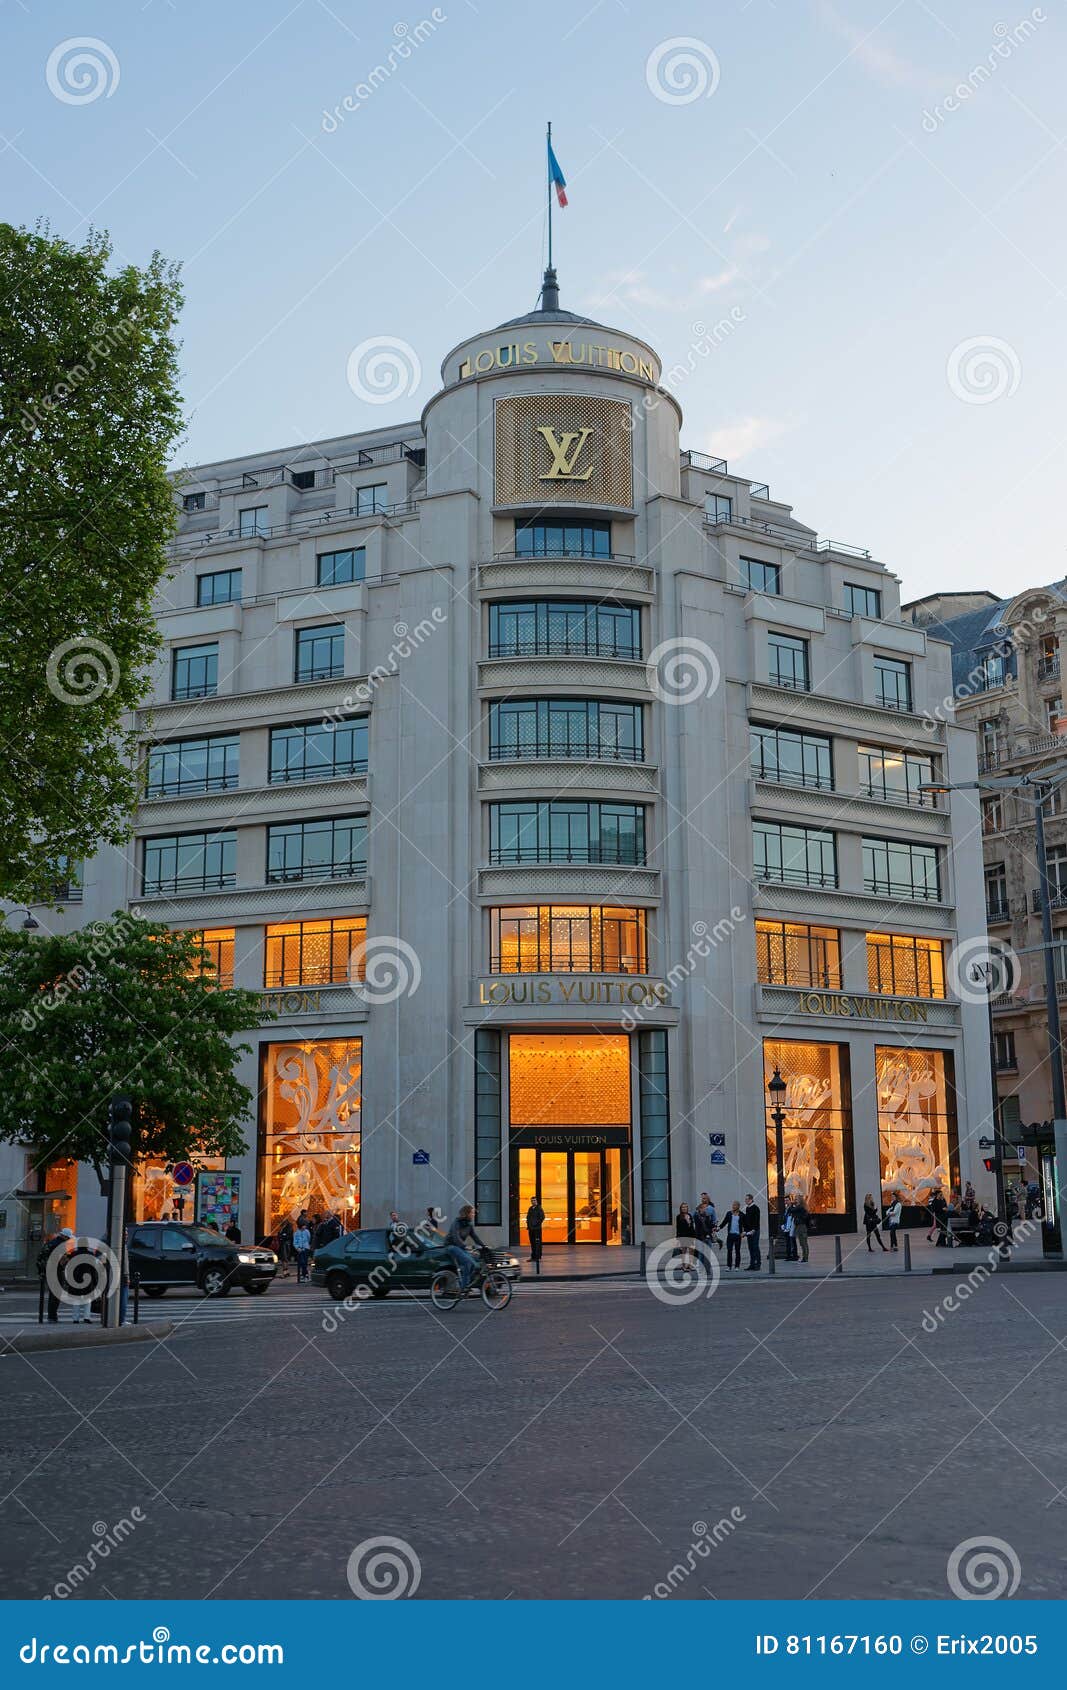 Louis Vuitton Flagman Store At Avenue Of Champs Elysees Paris Editorial Image - Image of avenue ...